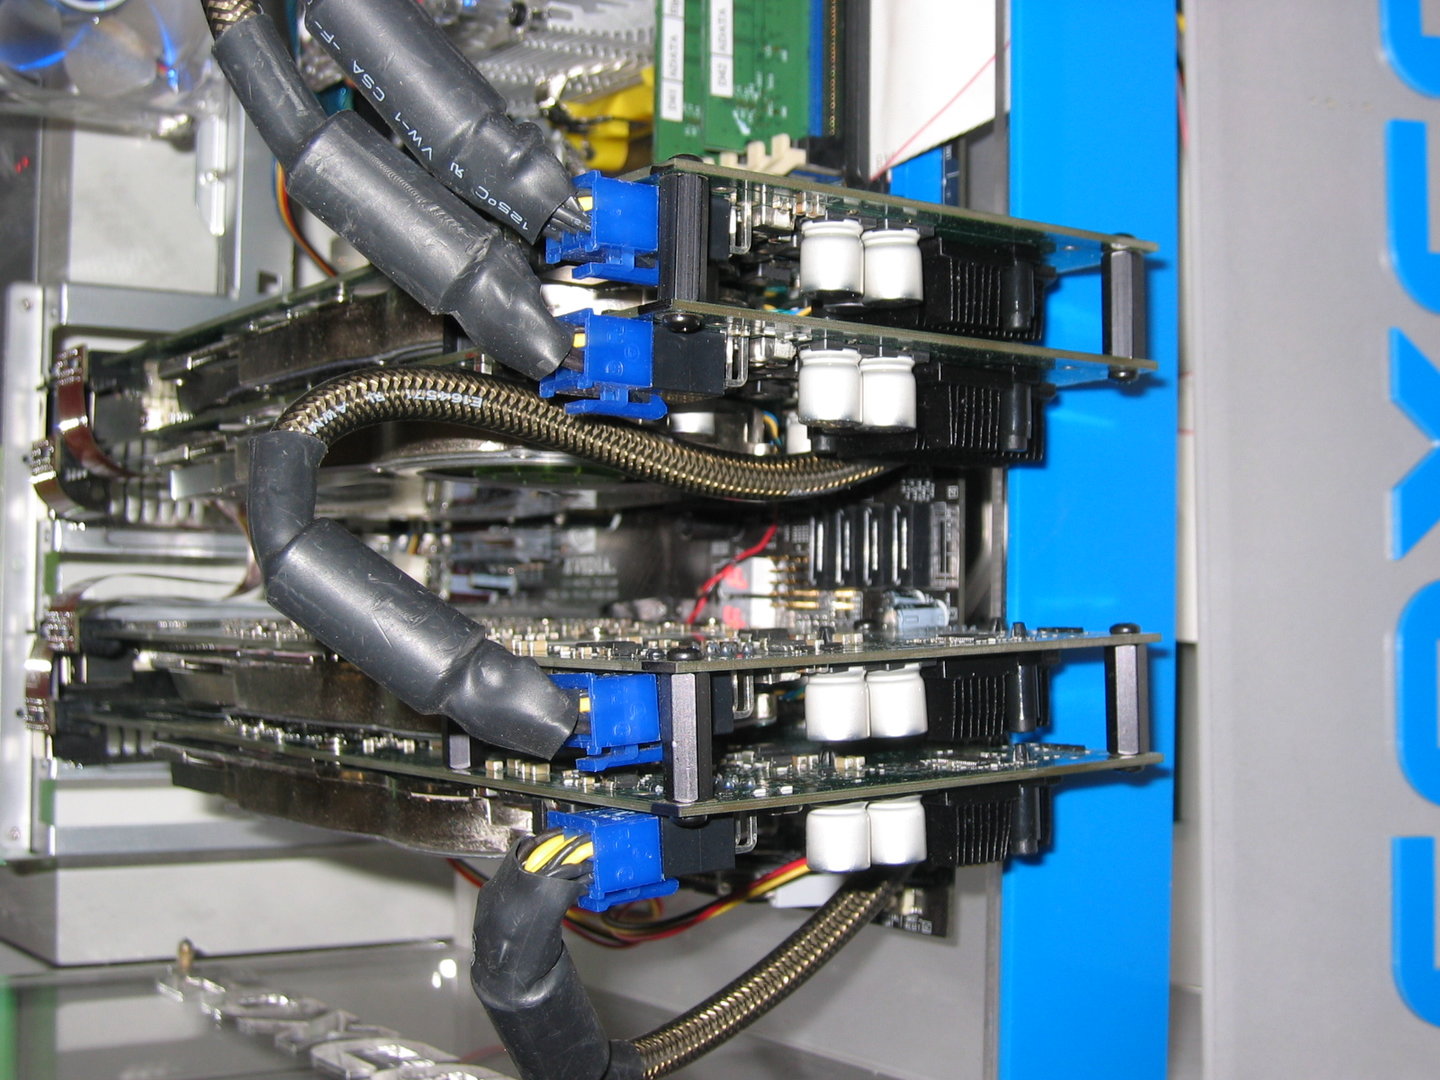 Foxconn-System mit Quad-SLI